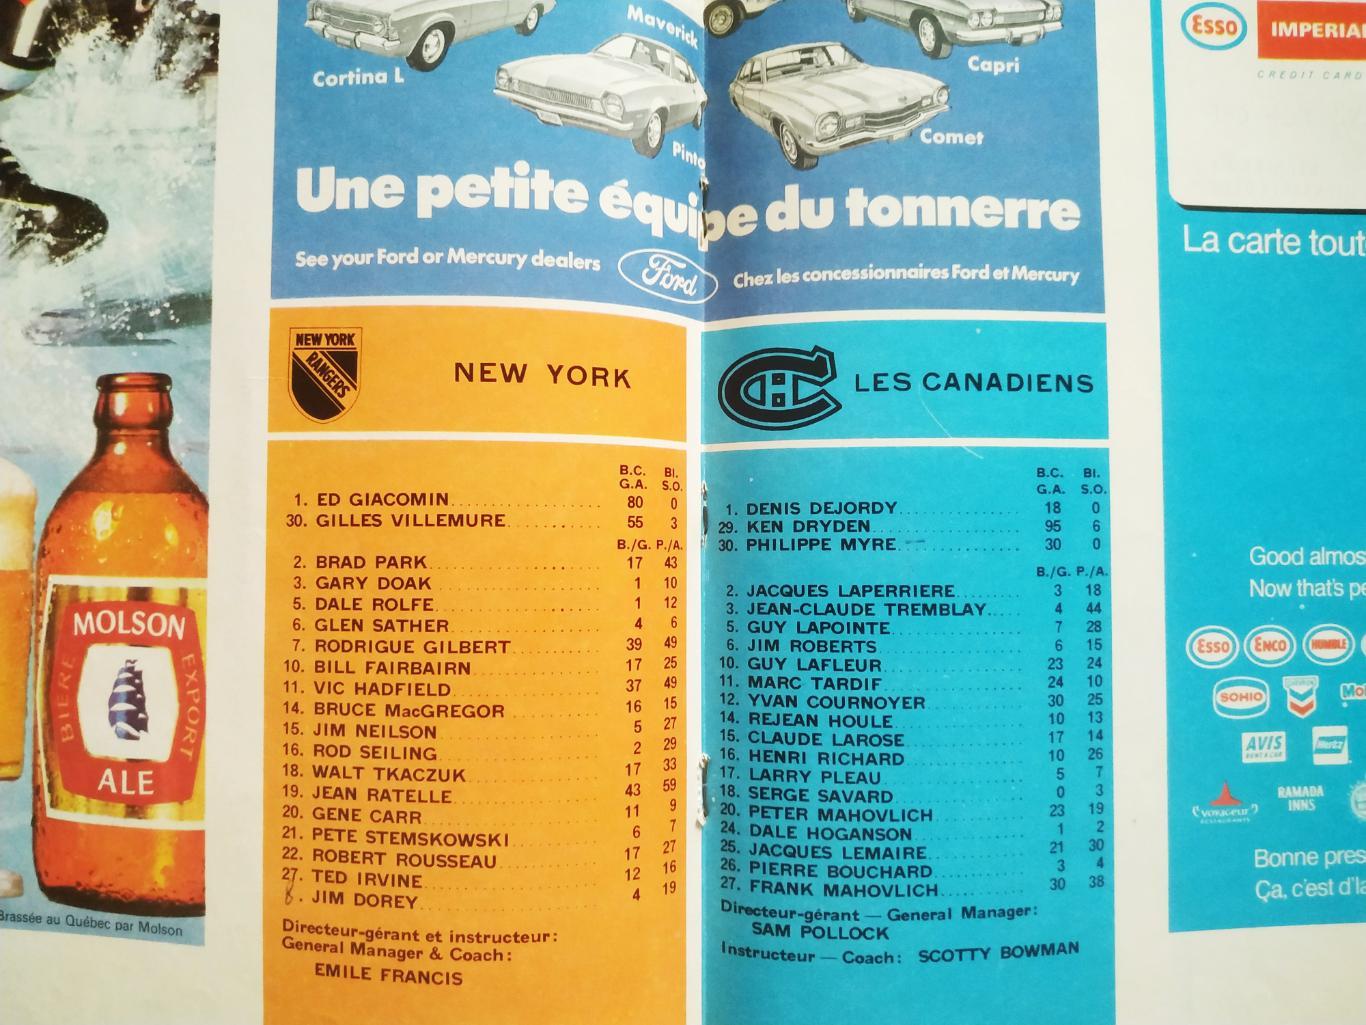 ХОККЕЙ ПРОГРАММА МАТЧА НХЛ NHL 1972 FEB.22 NEW YORK VS. CANADIENS PROGRAM GAME 3